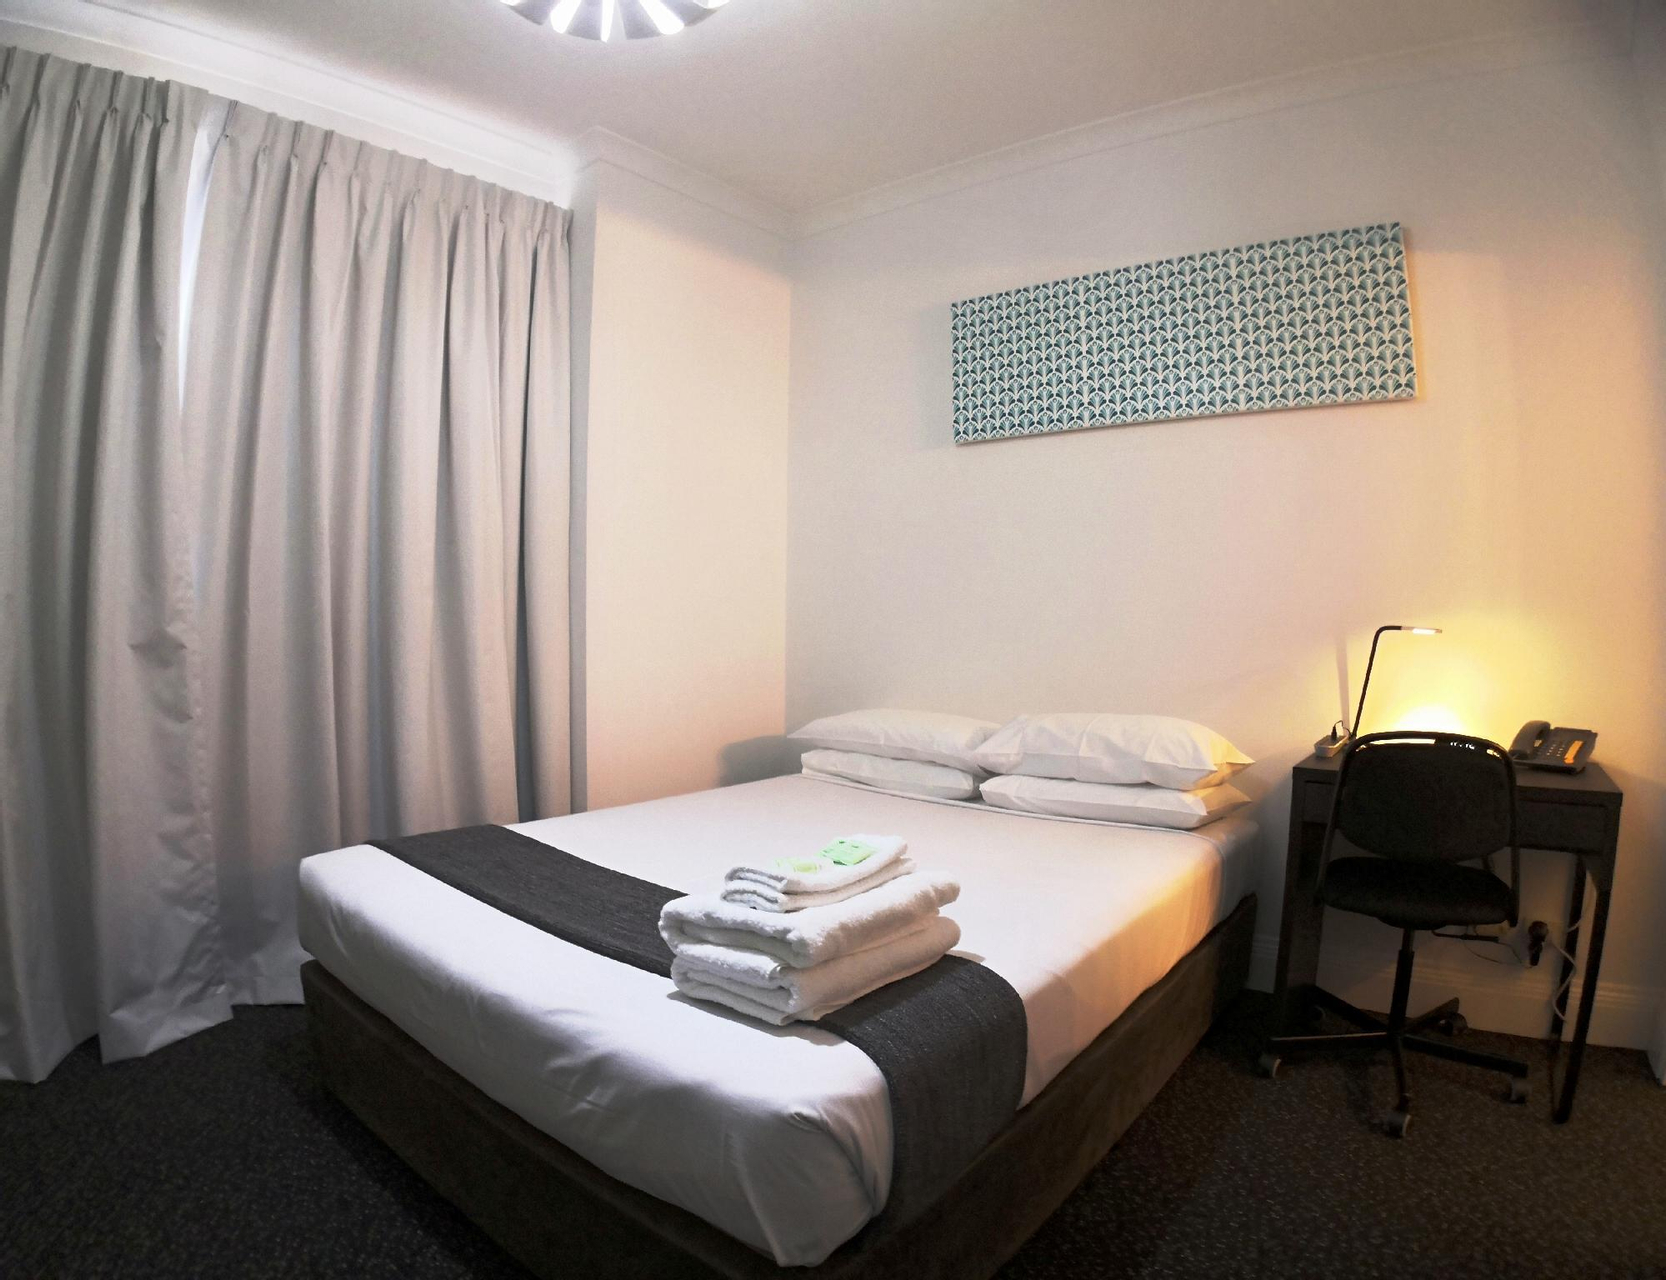 Bedroom, Criterion Hotel Perth, Perth